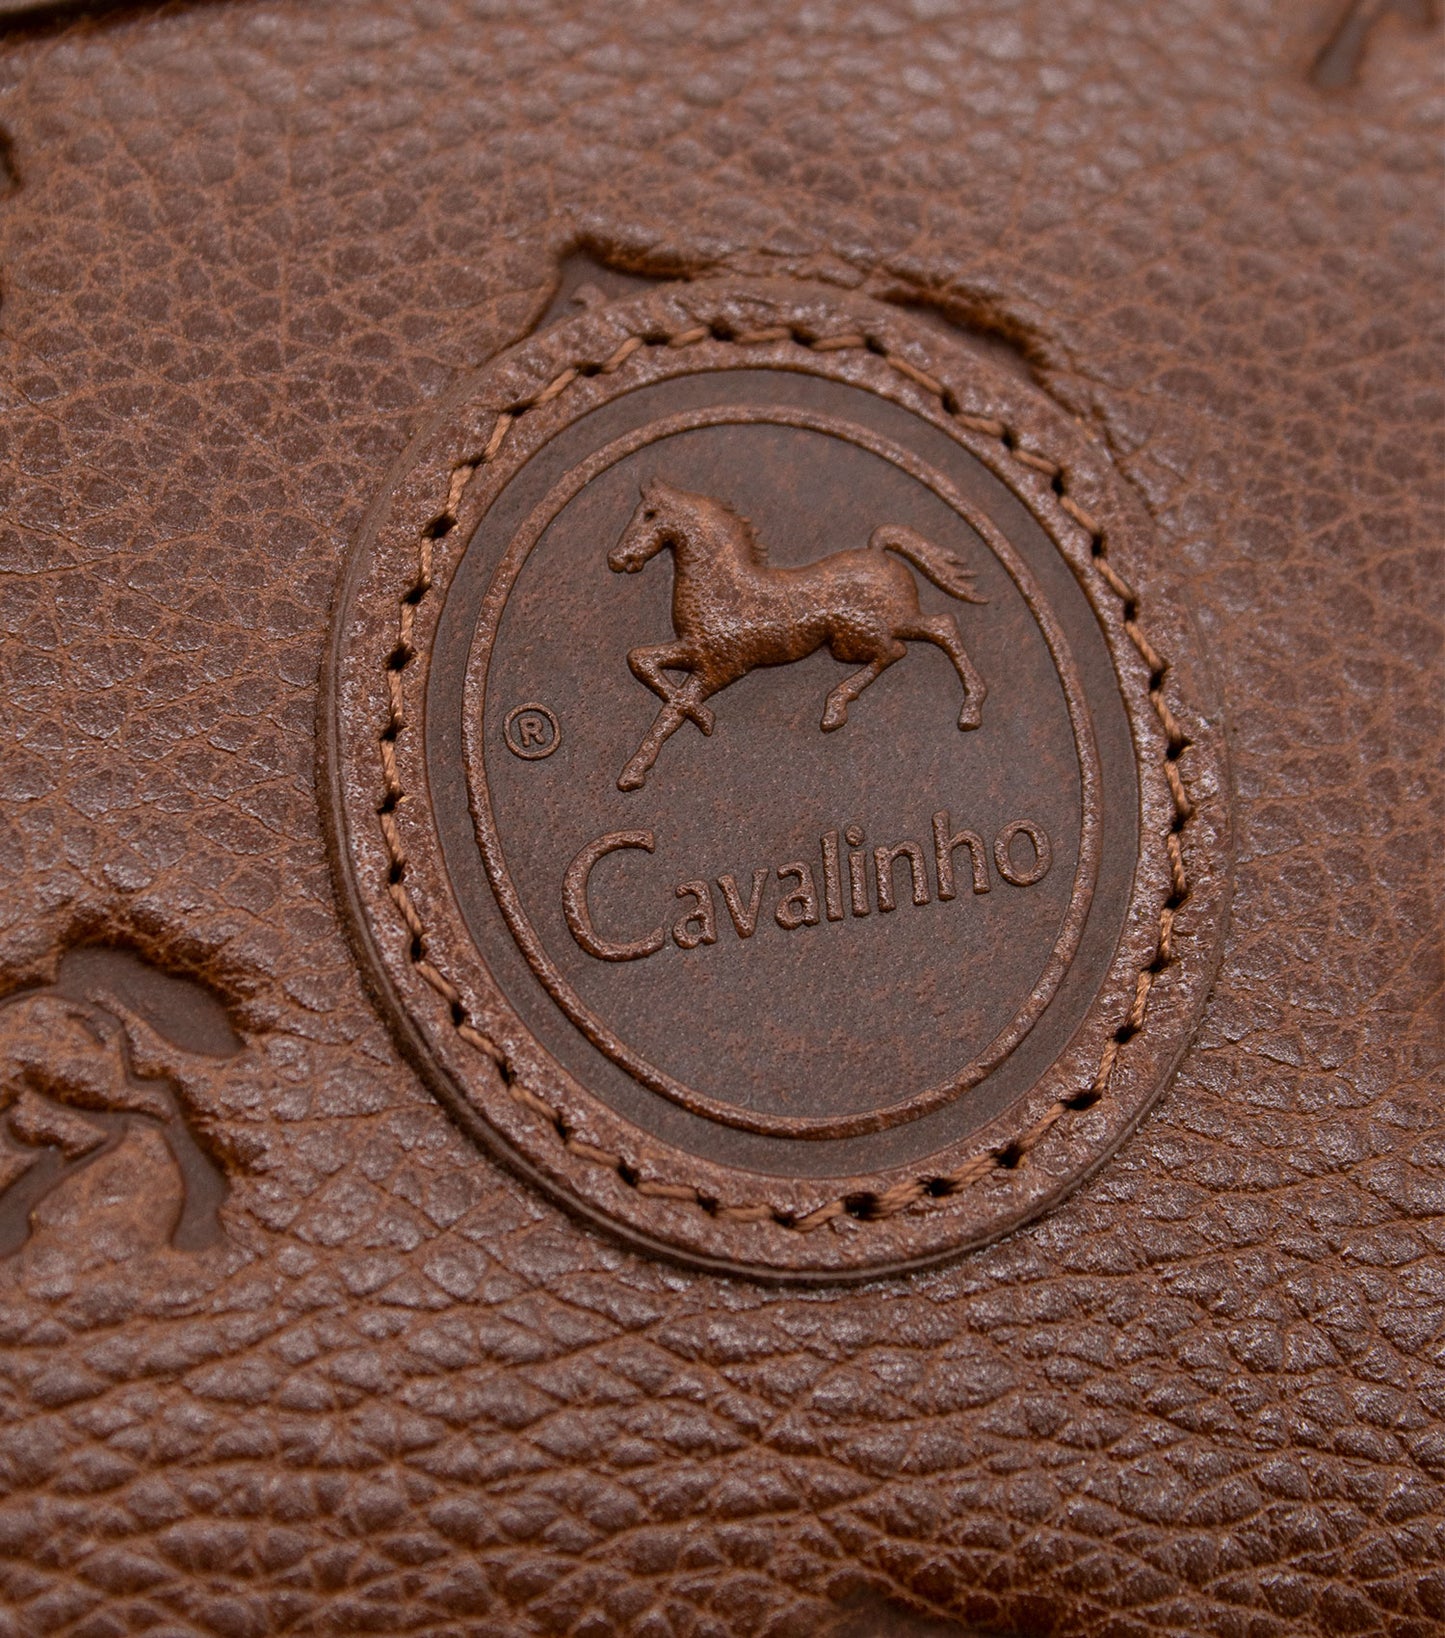 Cavalinho Cavalo Lusitano Leather Crossbody Bag - SaddleBrown - 18090401.13_P04